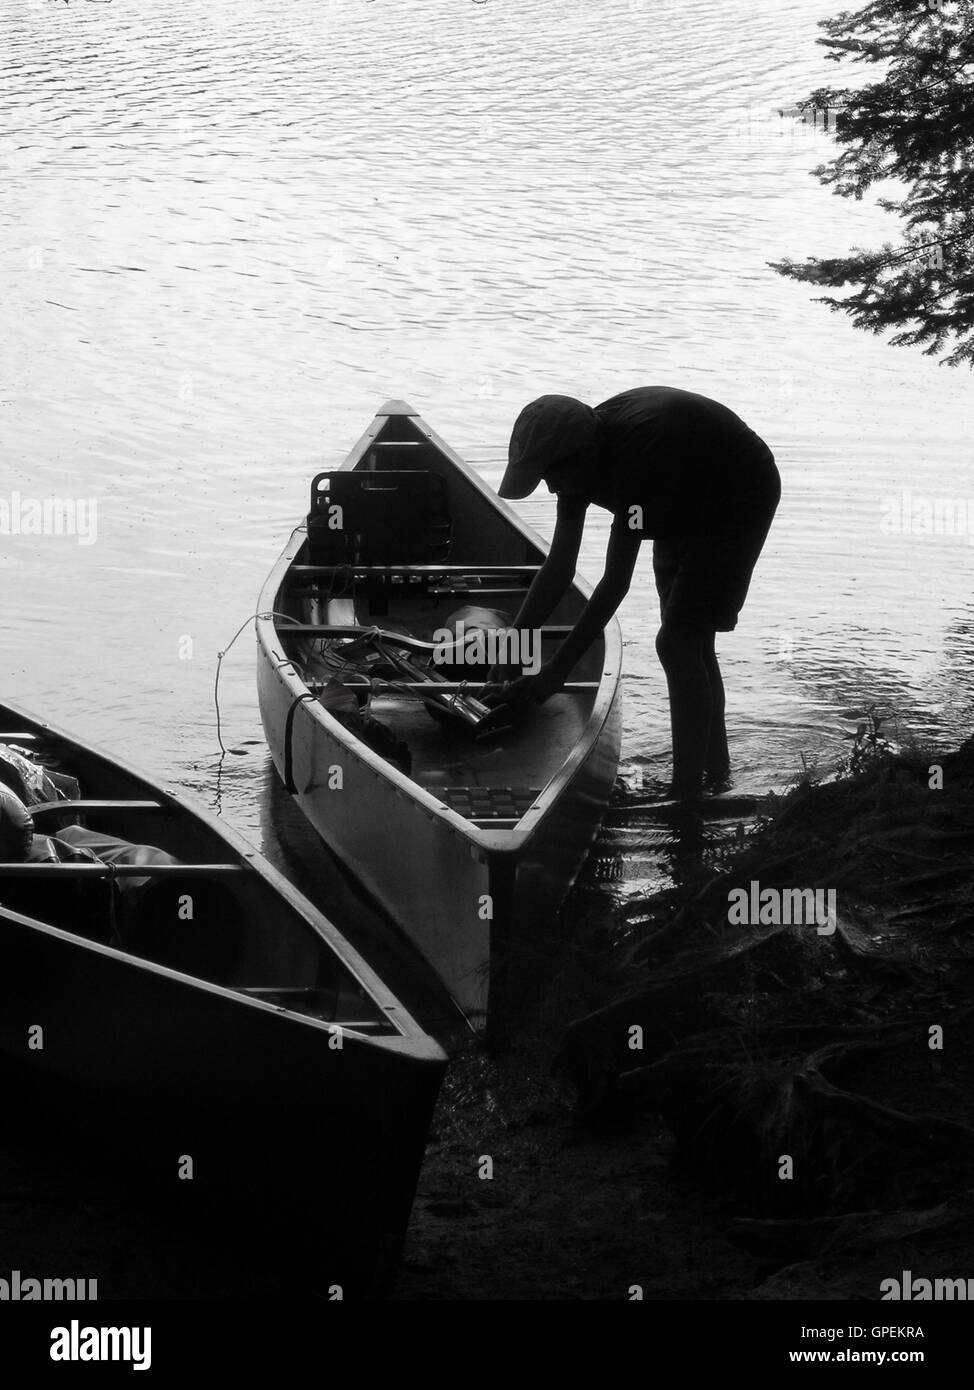 Boy Loading Canoe in Silhouette on Lake Stock Photo